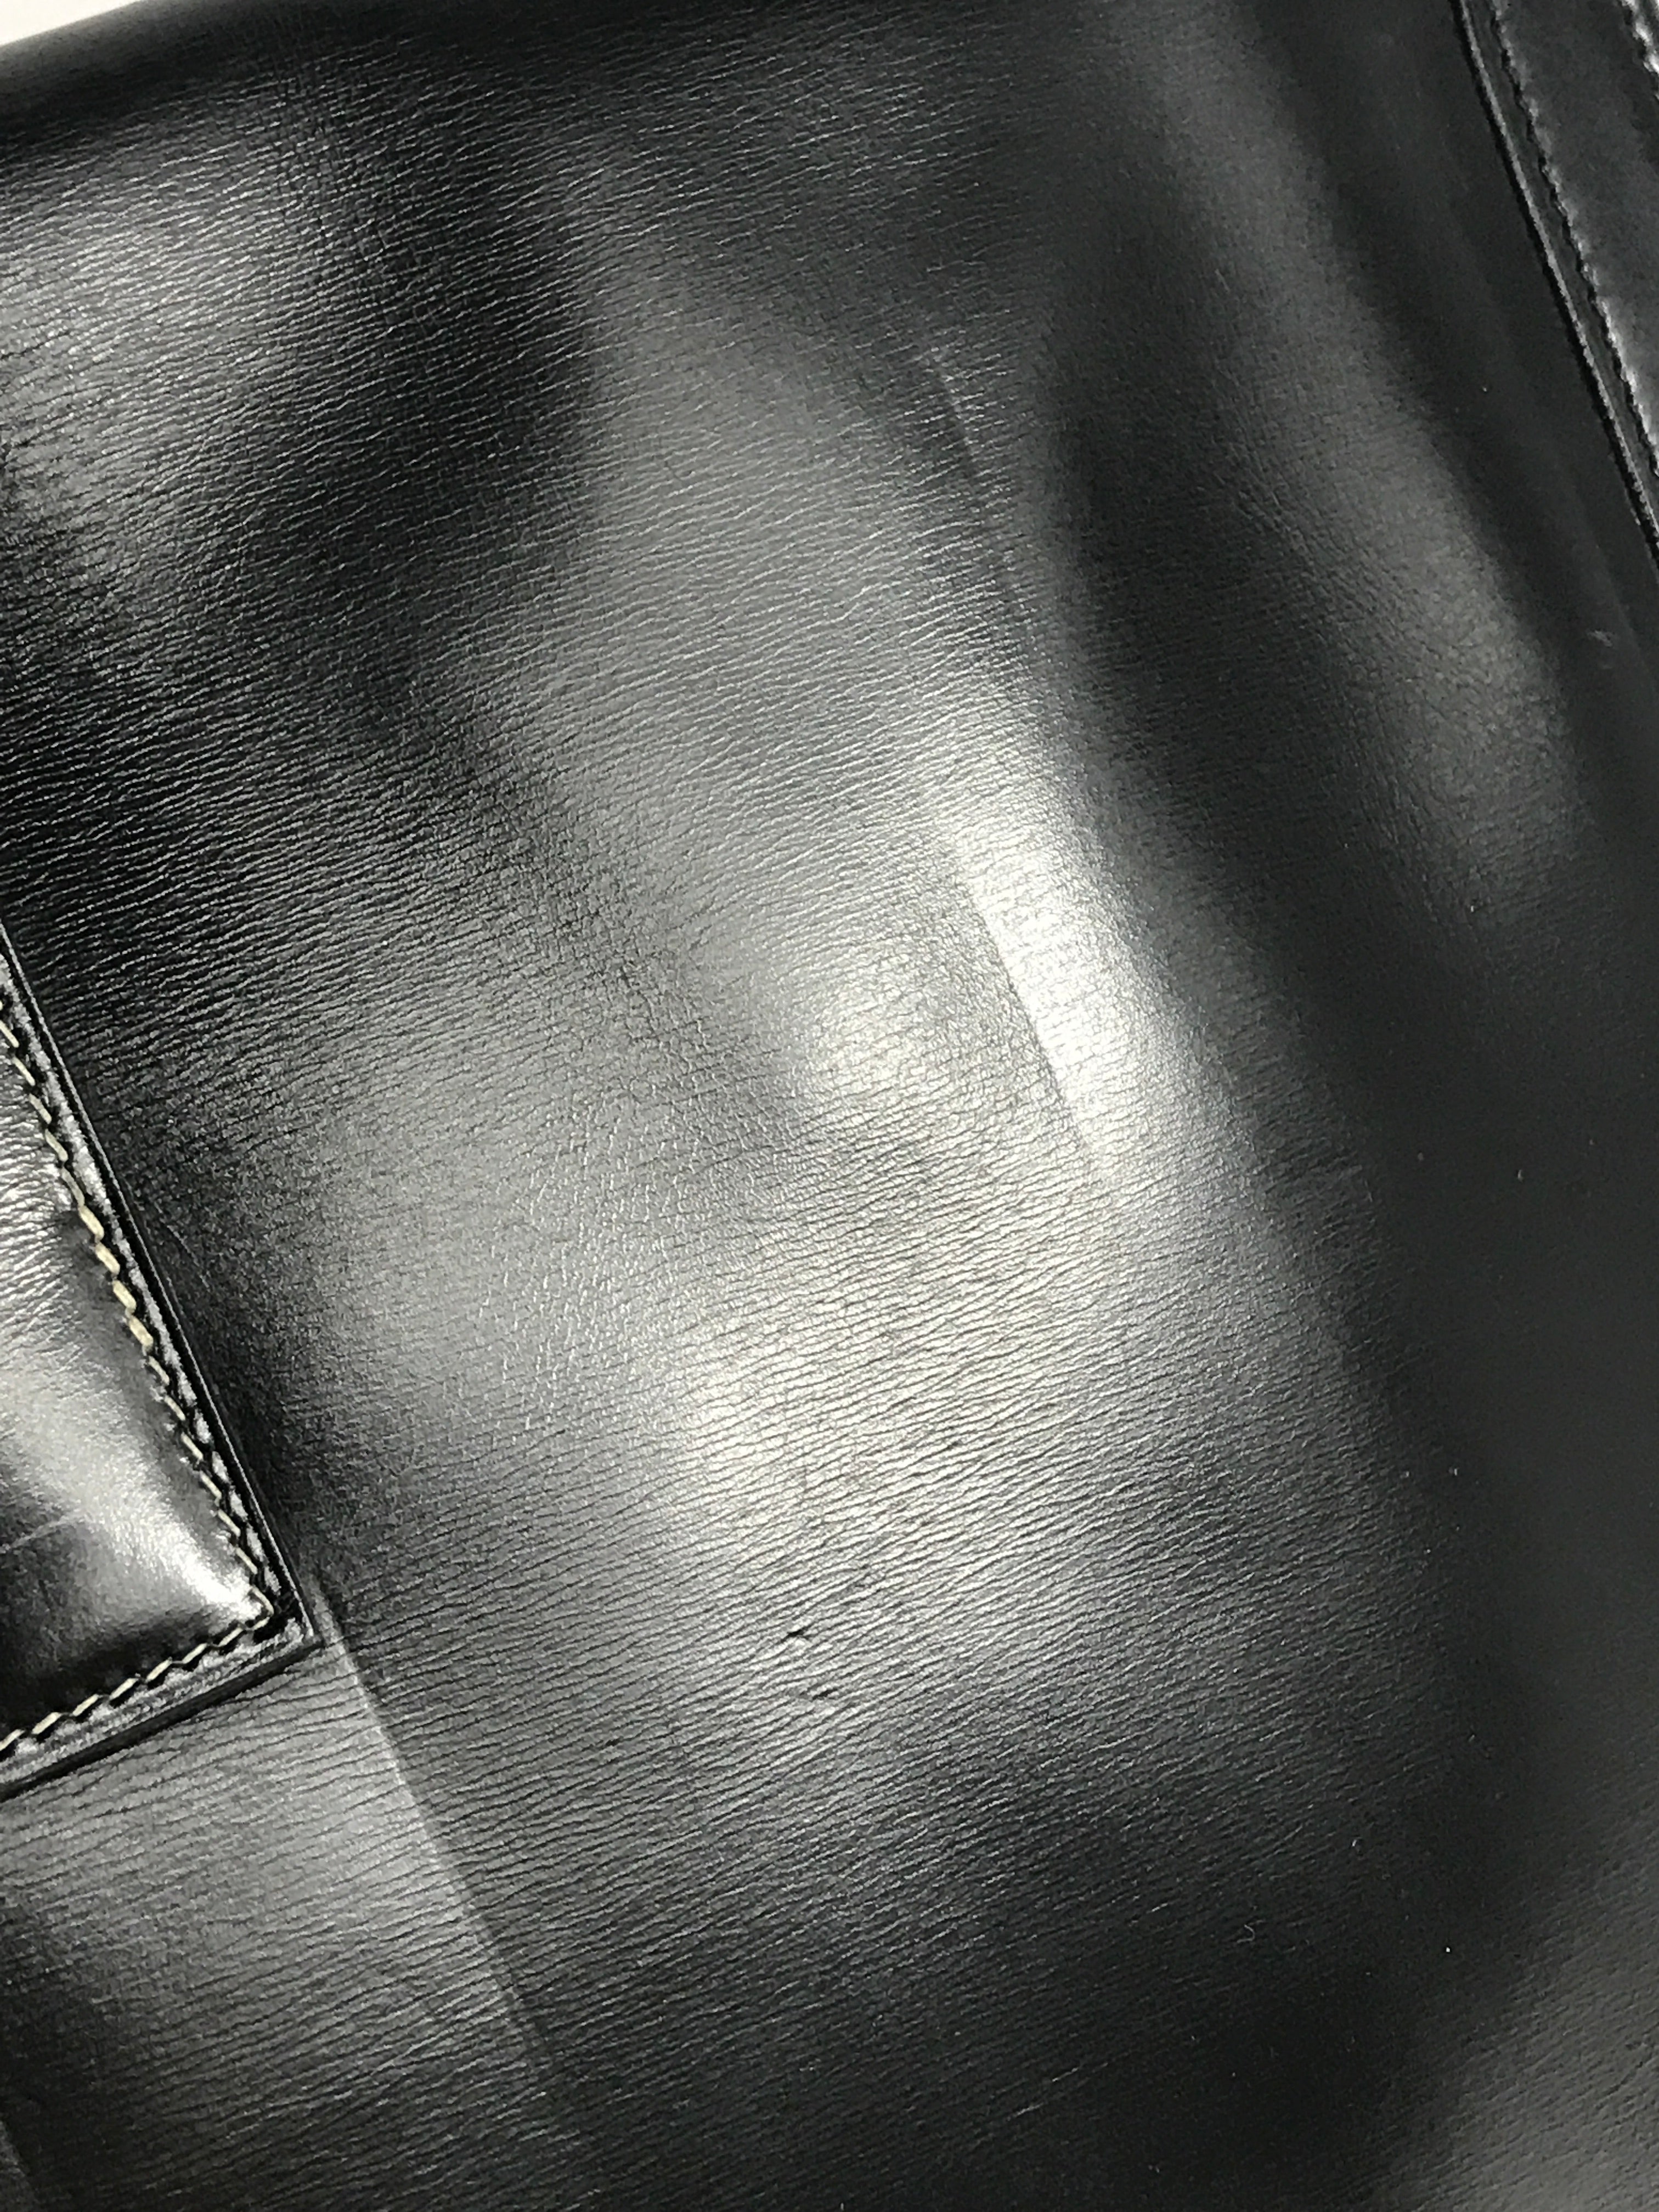 Black Box Calf Leather Portfolio Vintage Jige 34